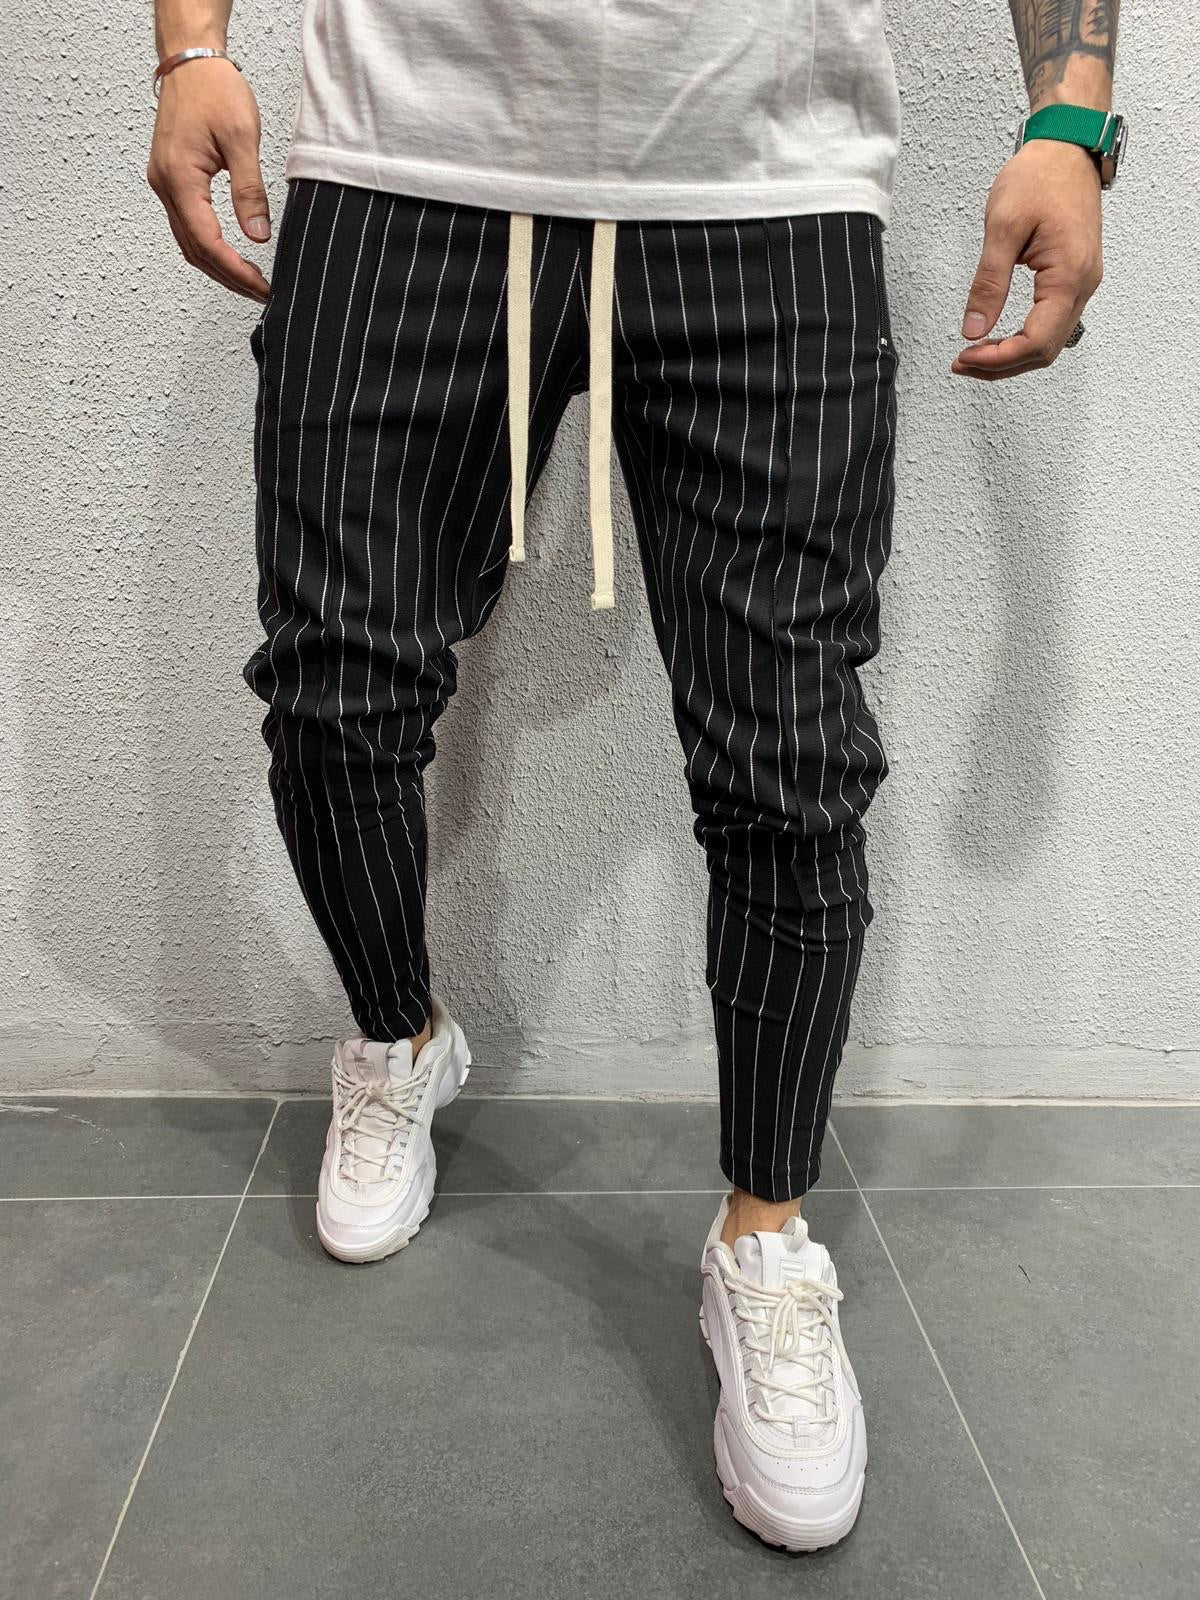 jogger striped pants